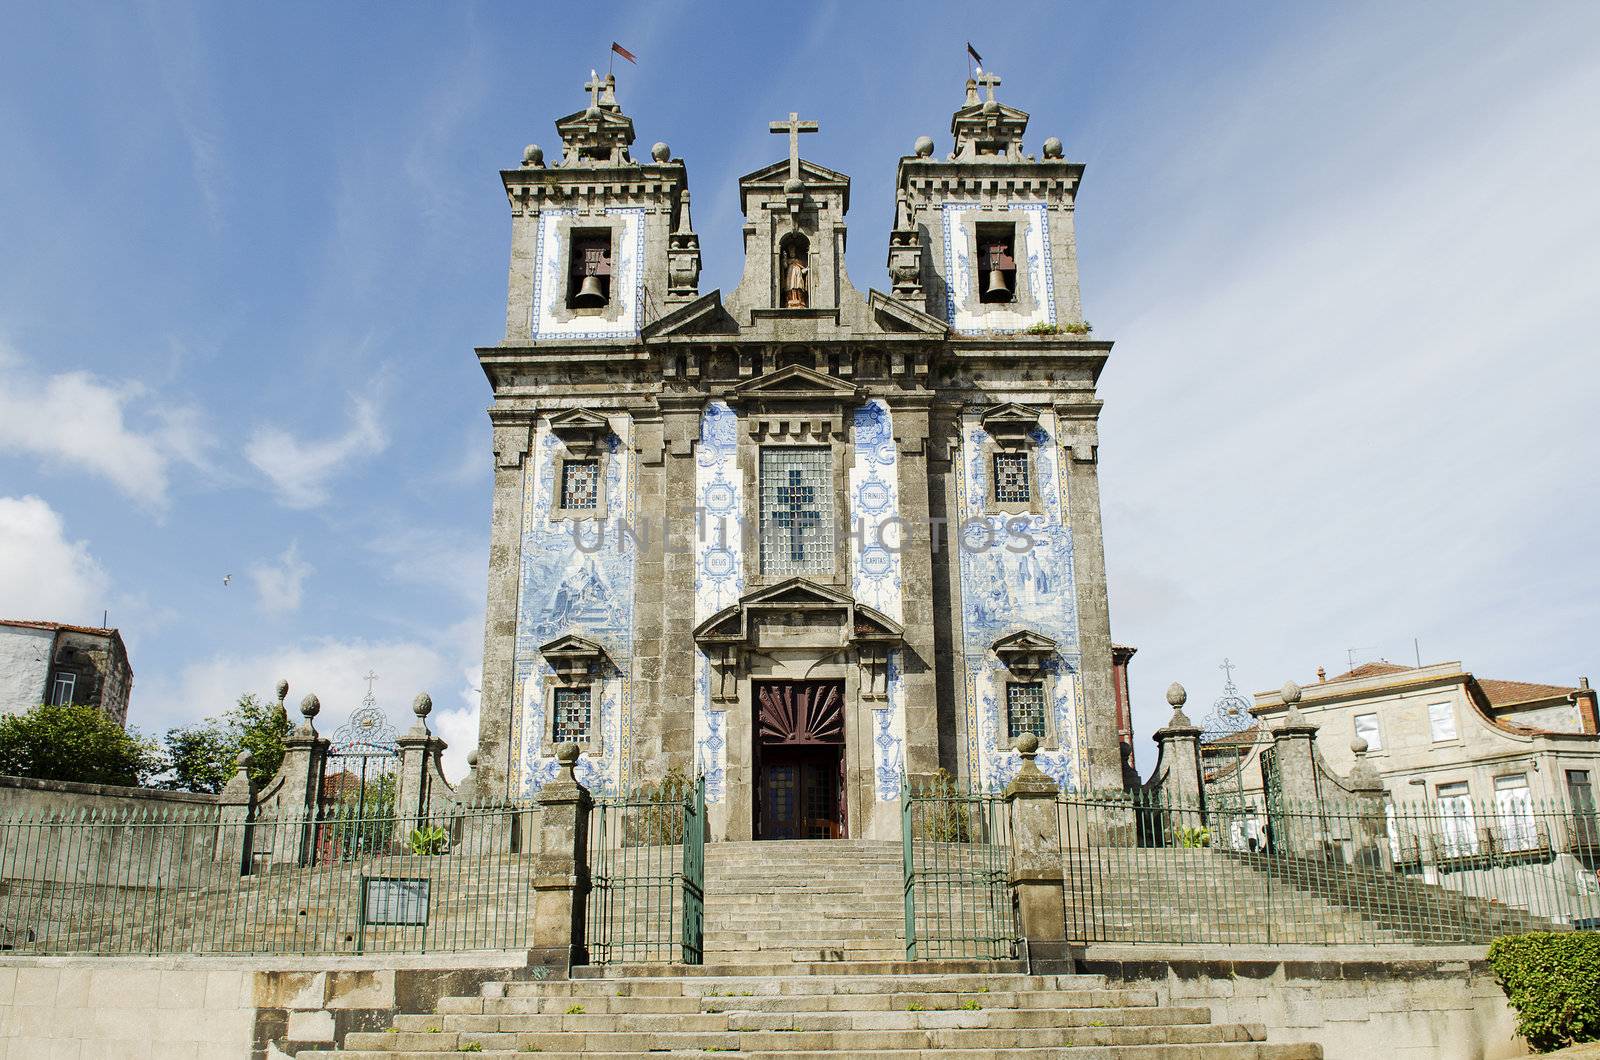 santo ildefonso church in porto portugal by jackmalipan